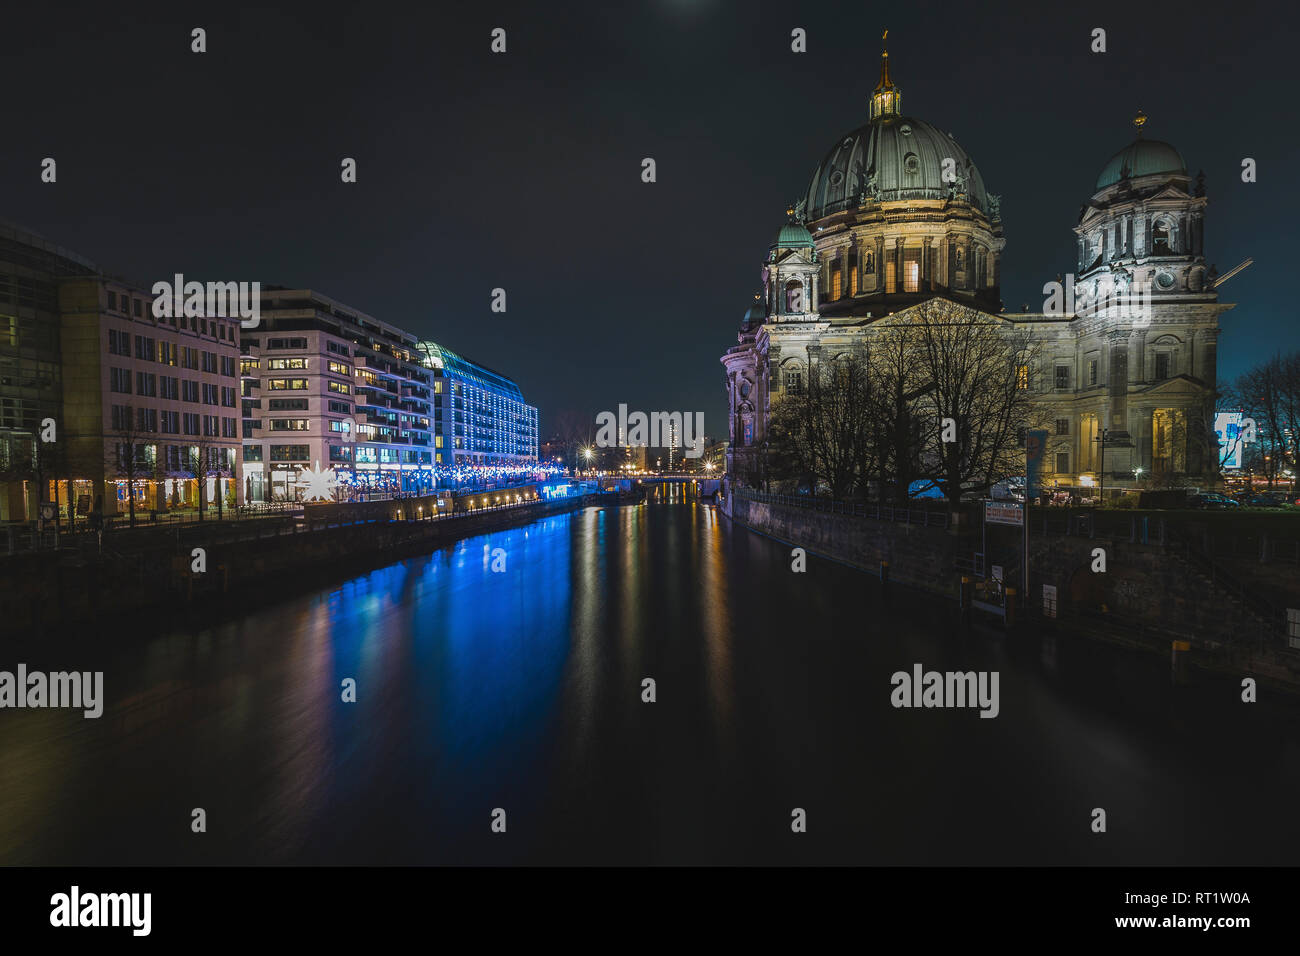 Allemagne, Berlin, Berlin, la cathédrale de Berlin et Friedrichs Bridge at night Banque D'Images